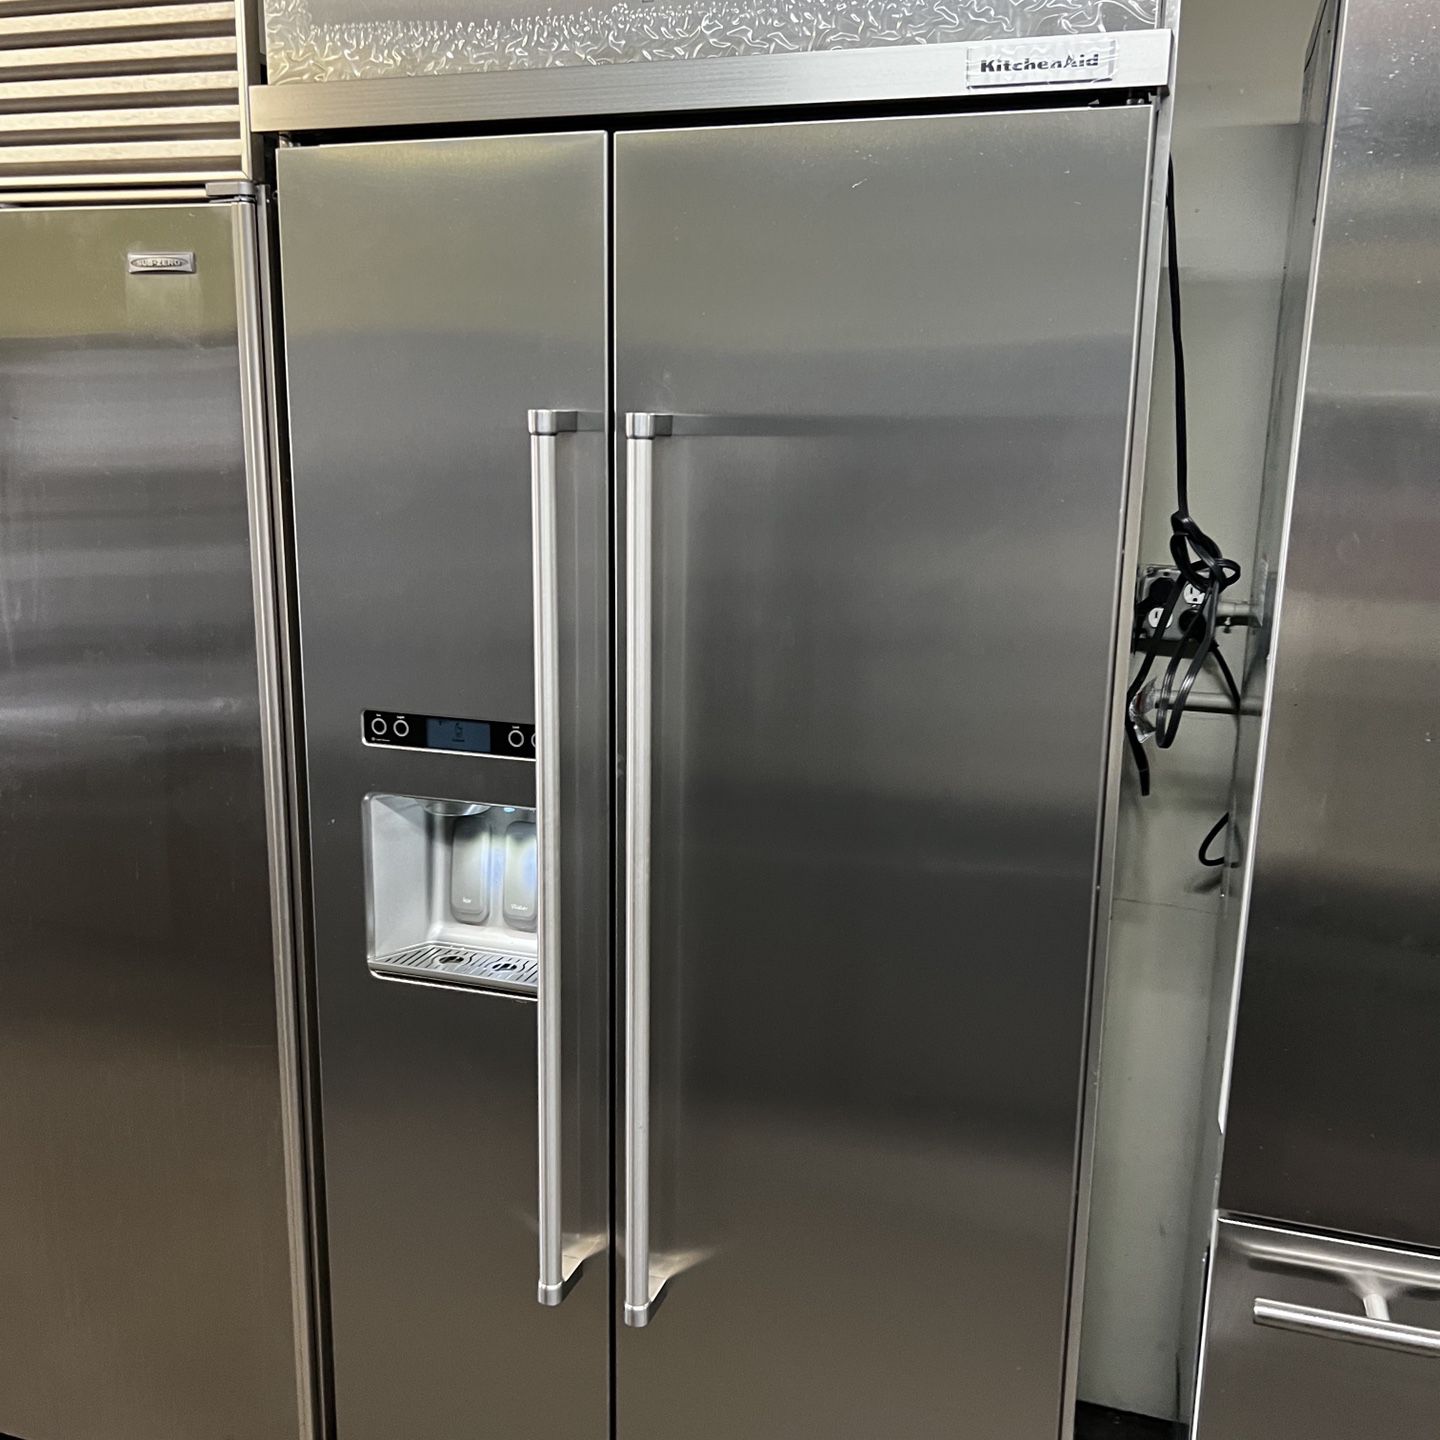 Kitchen Aid 36”wide Built In Stainless Steel Refrigerator 